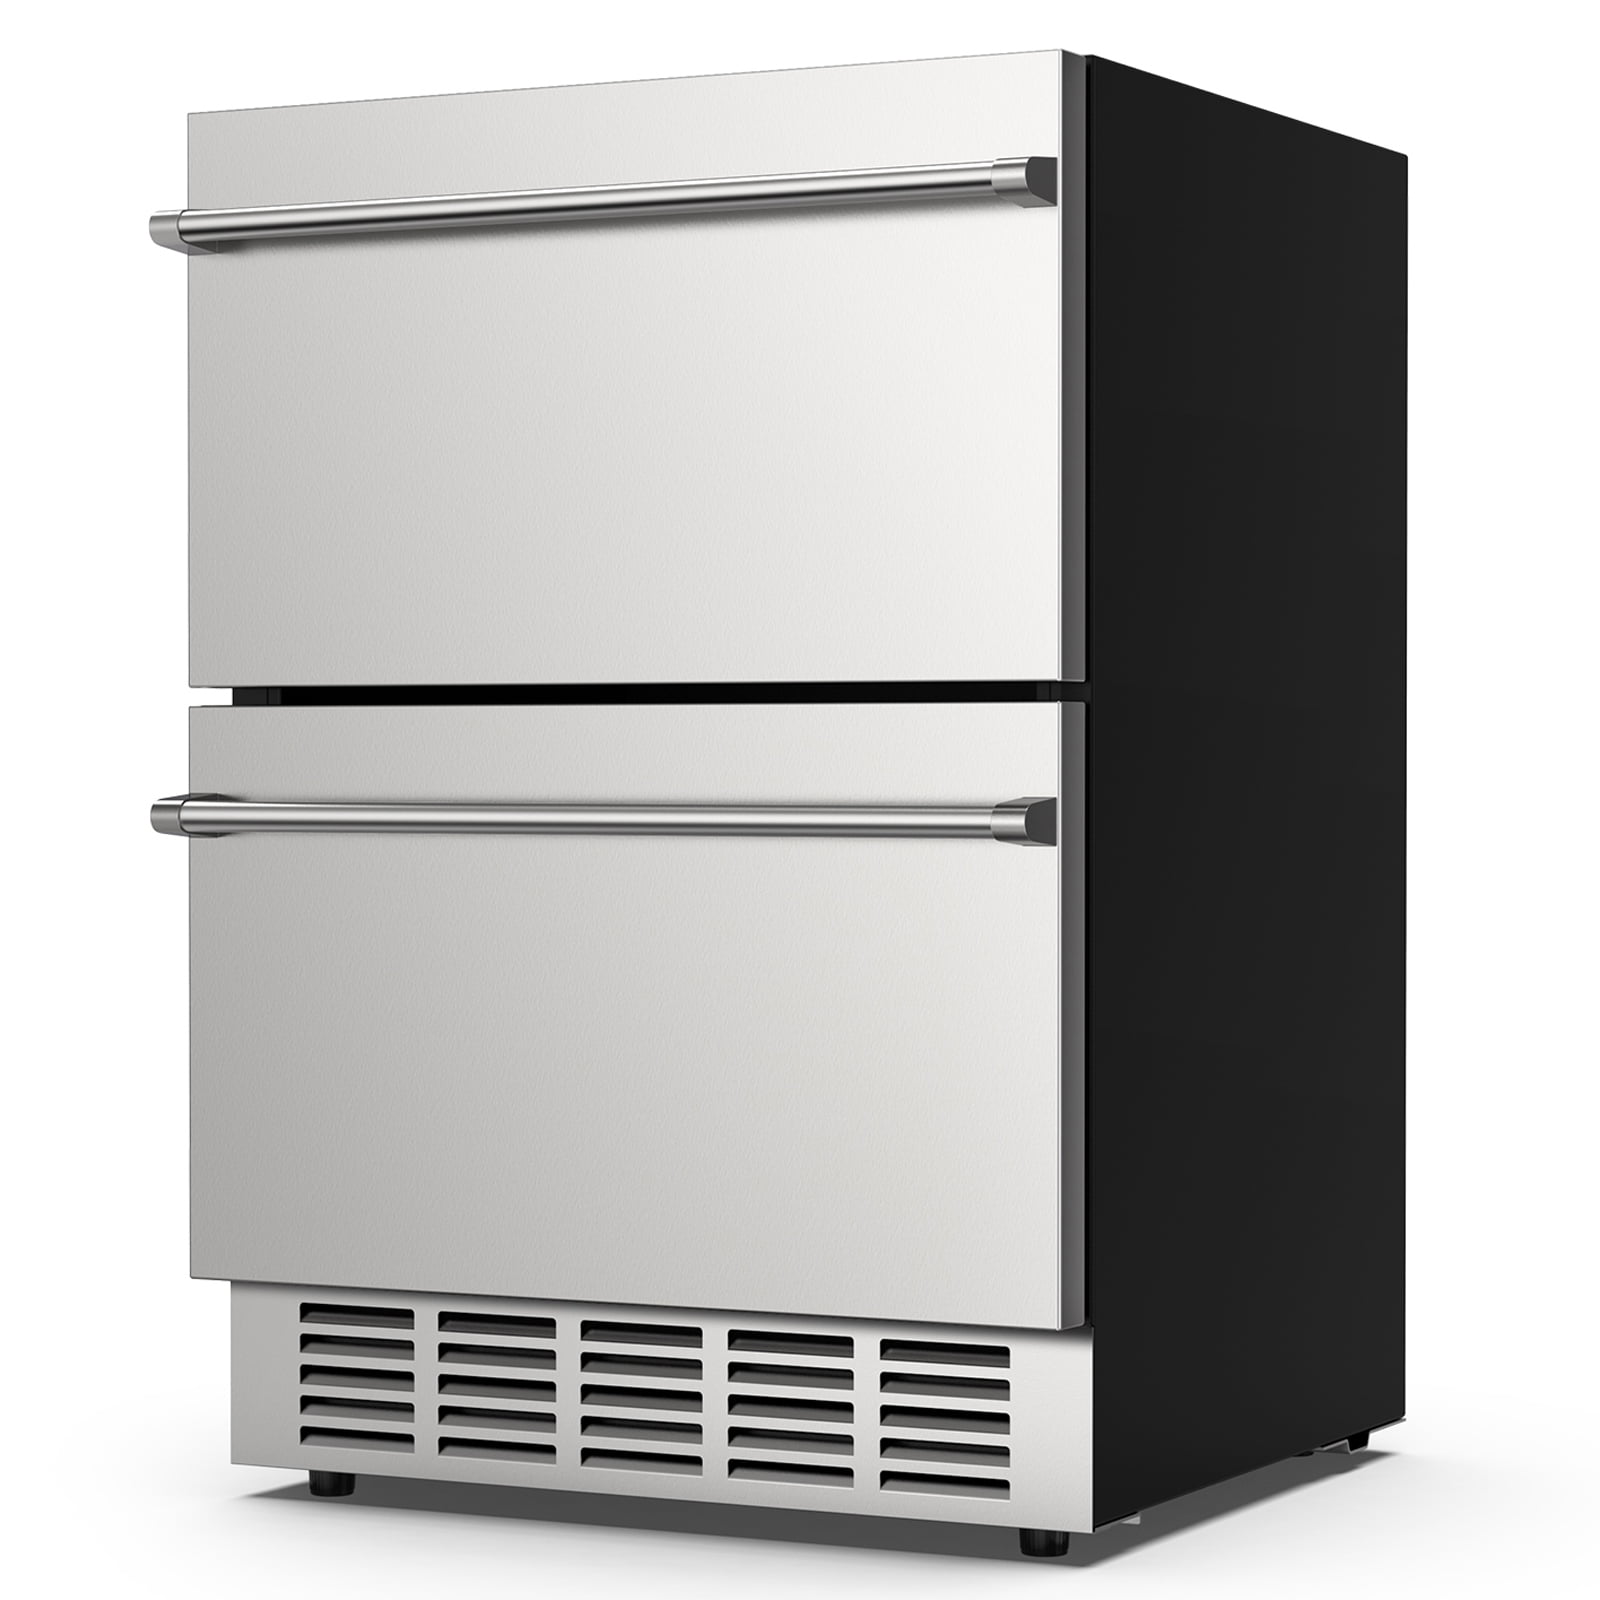 24 Inch Indoor Outdoor Refrigerator Drawer In Stainless Steel